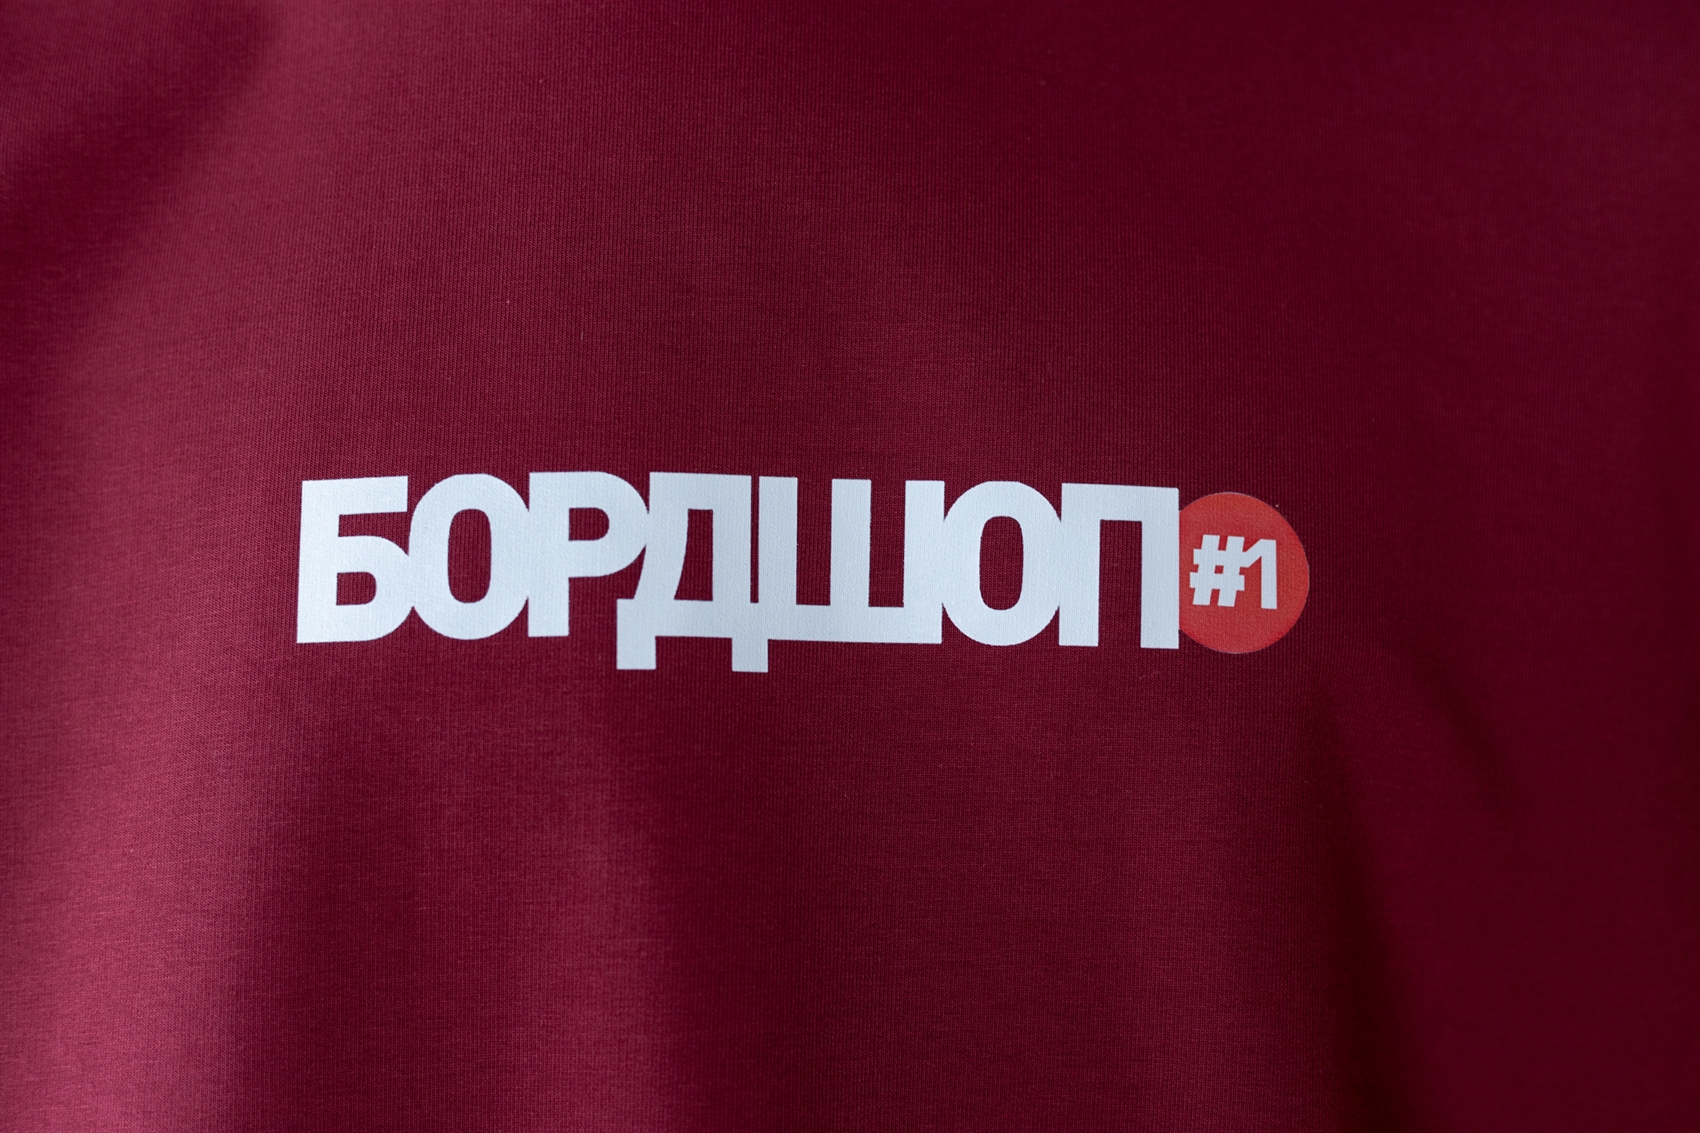 Футболка БОРДШОП#1 classic logo v2 бордовый - фото 43783